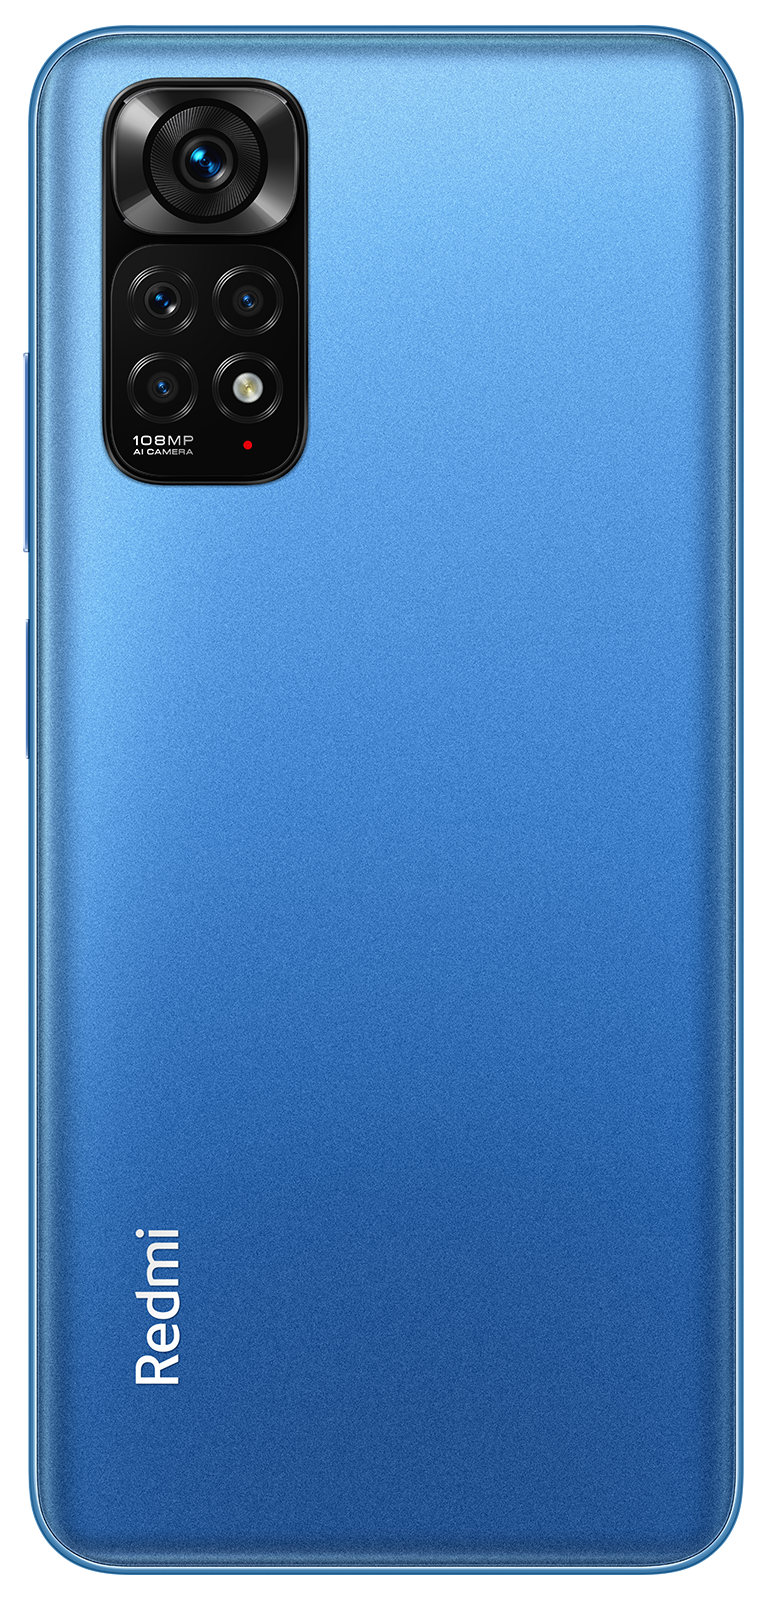 Redmi Note 11S 6GB/64GB modrá